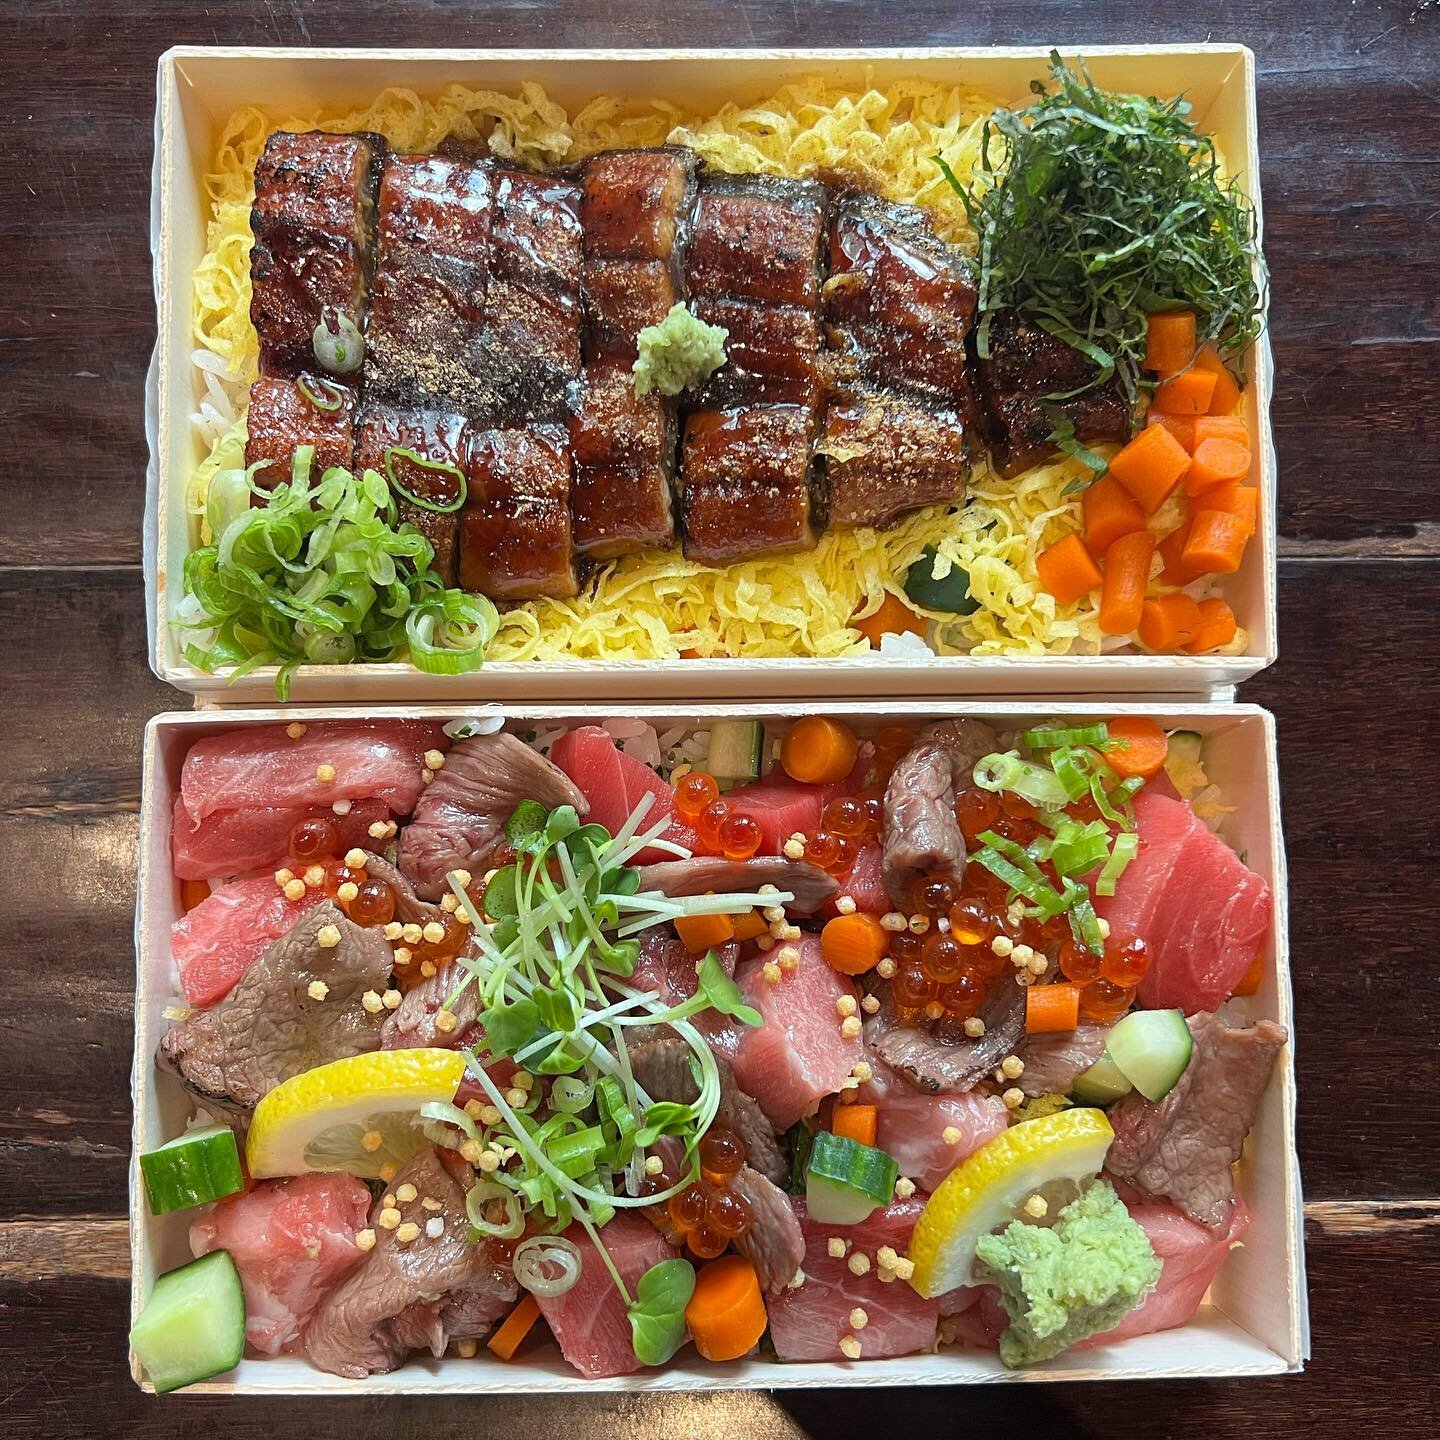 Tamari Bar's #premium bento.
Available on @doordash and @baitenseattle 's window.
.
.
.
.
Let's enjoy #july #summerdays !! Let's do.
.
.
.
.
#bento
#弁当
#seattleeats 
#foodphotography 
#seattlefoodscene 
#unagi
#sushi
#barachirashi
#ばらちらし寿司 
#うなぎ
#cap